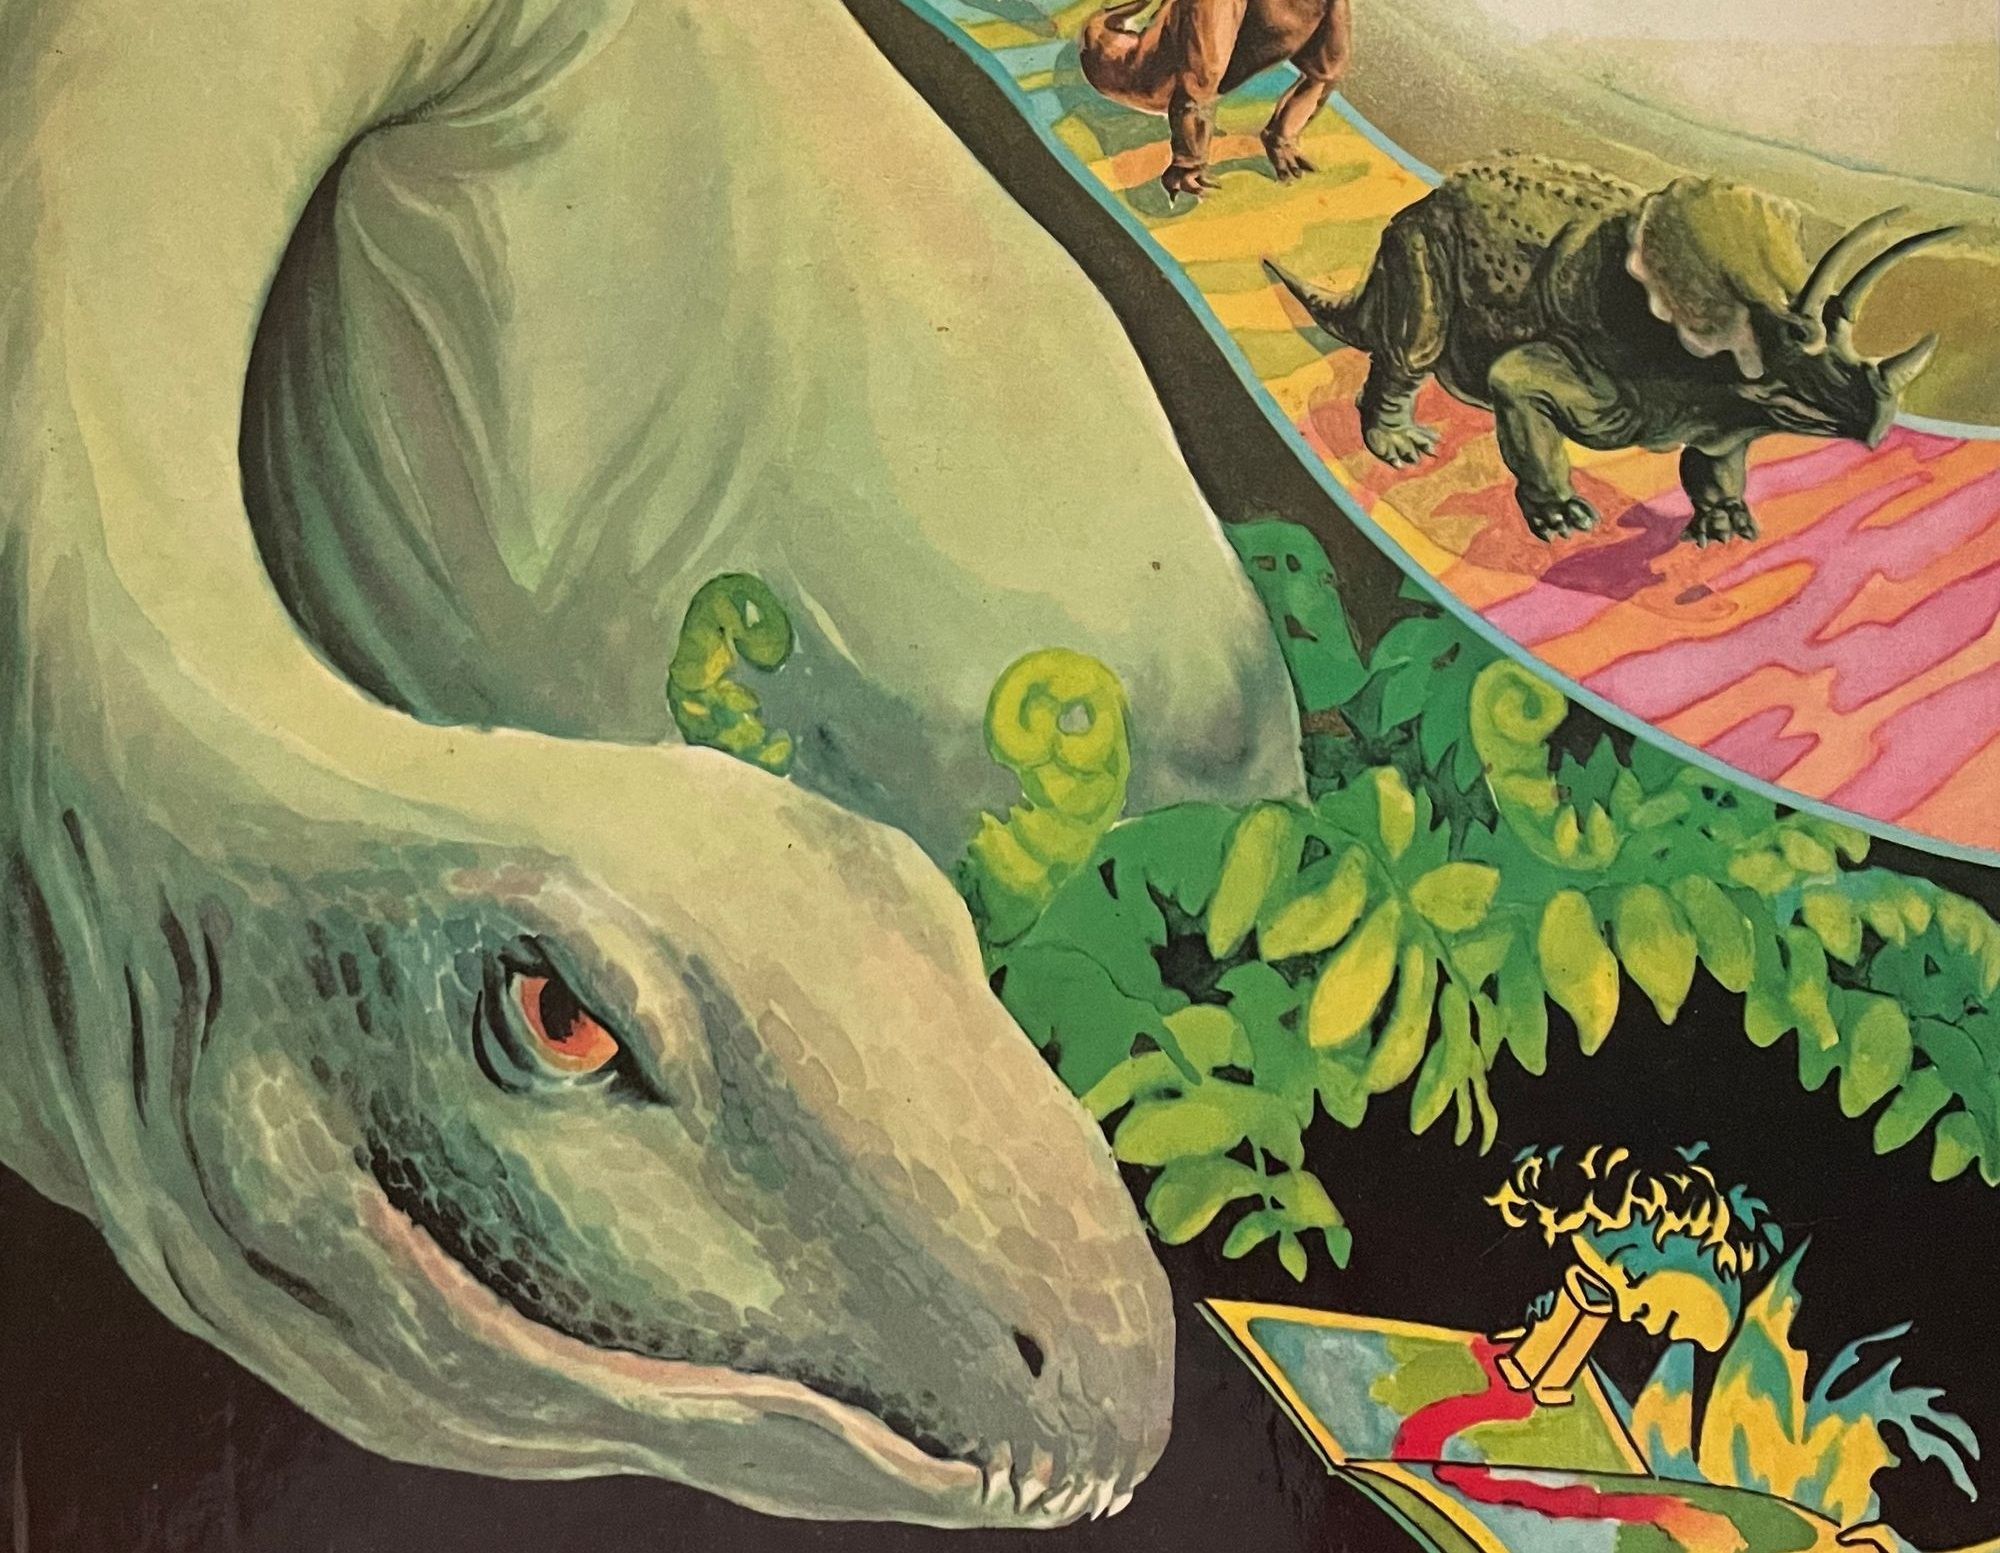 Half-Forgotten 70s Sci-Fi: "Fantasy Voyages"